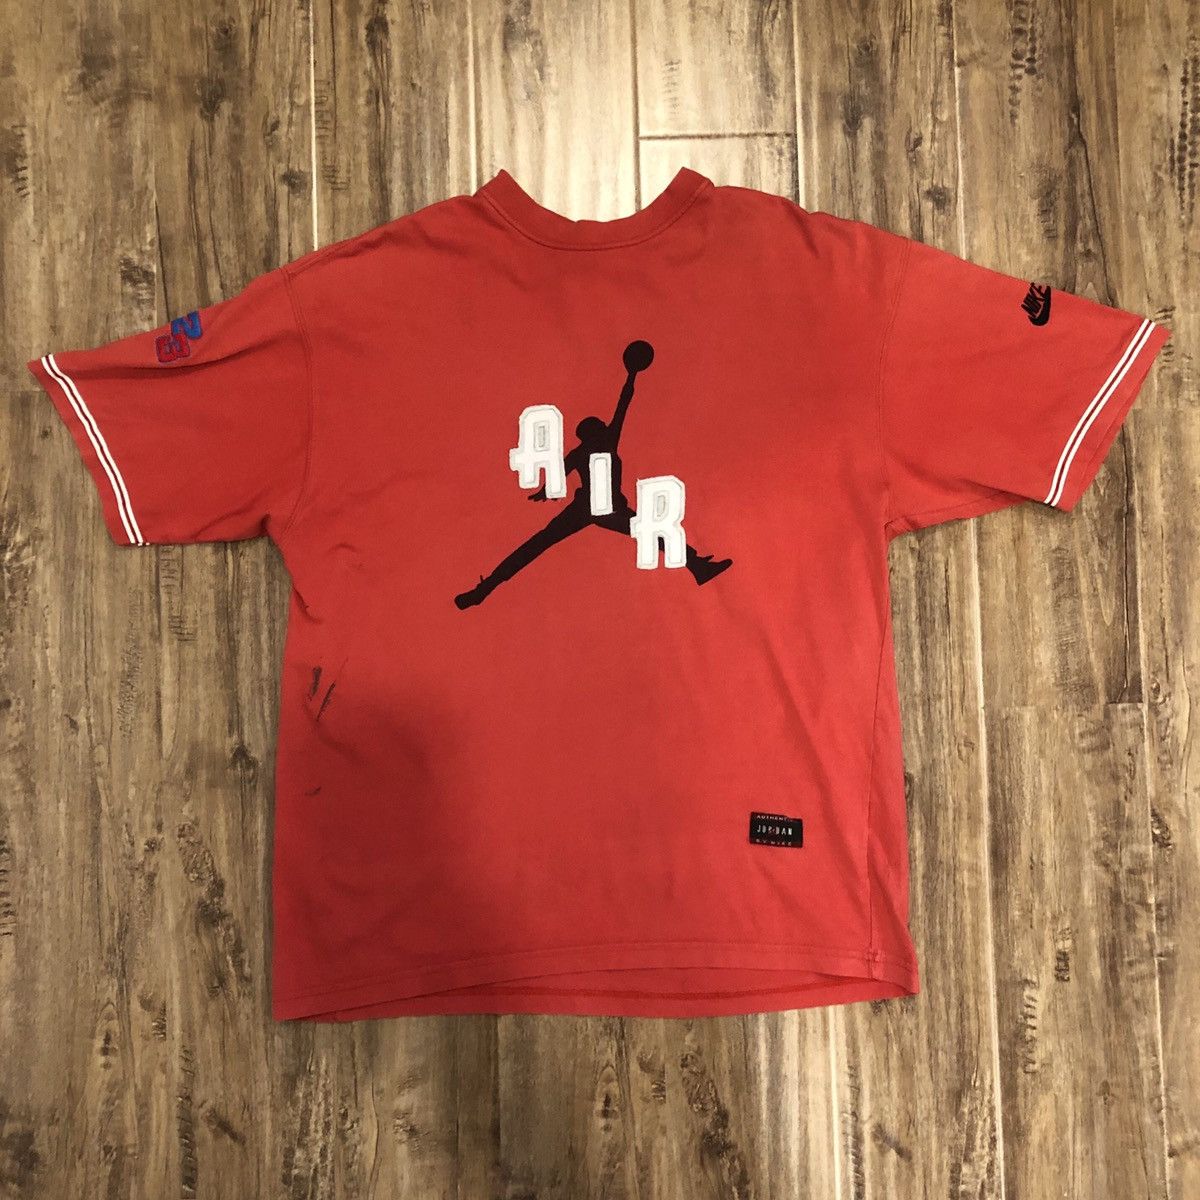 Nike Vintage Michael Jordan T-Shirt, Grailed